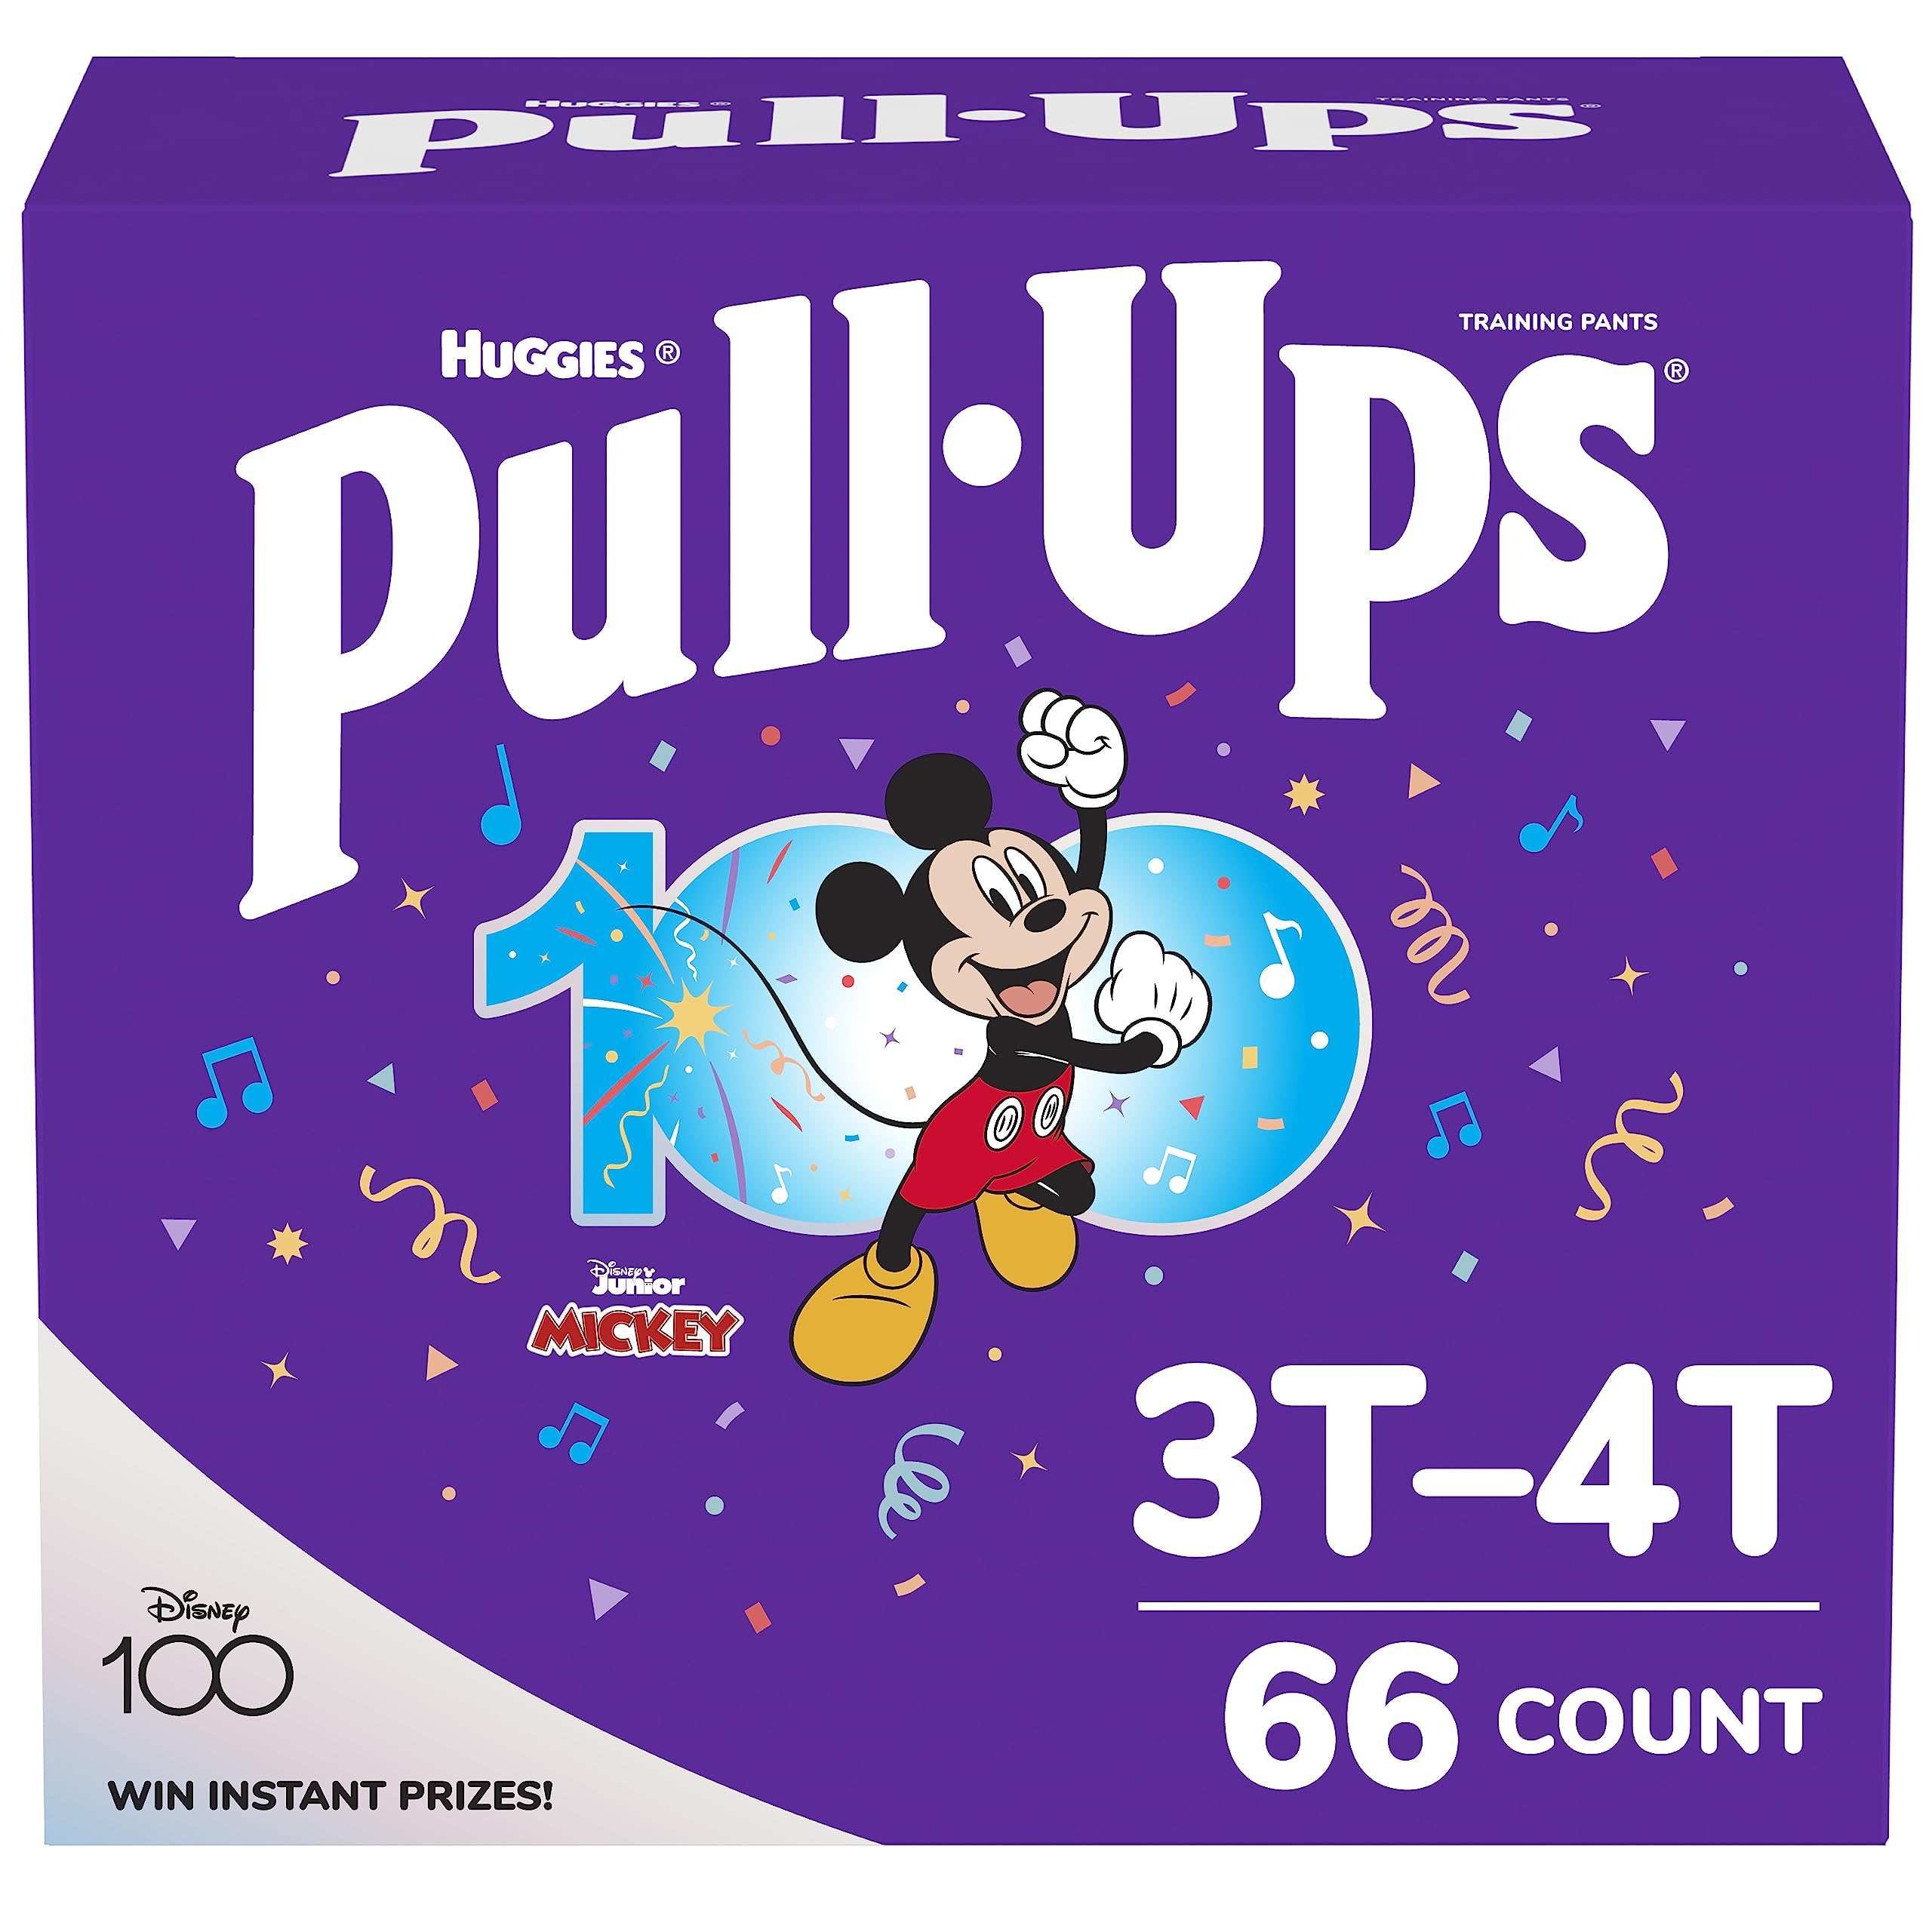 Pull-Ups Boys' Potty Training Pants Training Underwear Size 5, 3T-4T, 66 Ct - image 1 of 9